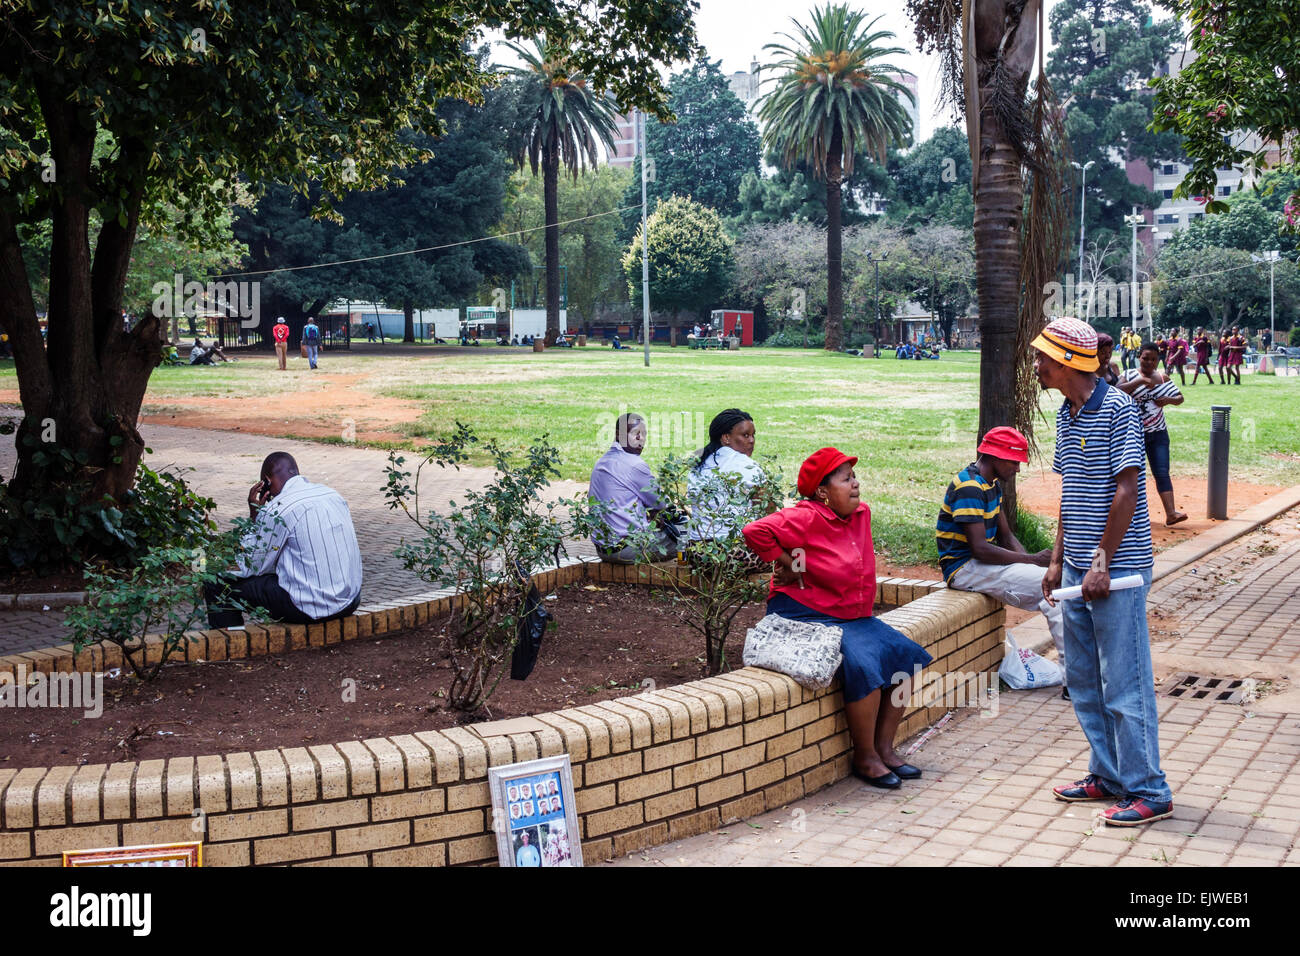 Johannesburgo Sudáfrica, Parque Joubert africano, Central de negocios, Distrito, Negros africanos africanos minoría étnica, adultos hombres hombres hombres, mujer Foto de stock